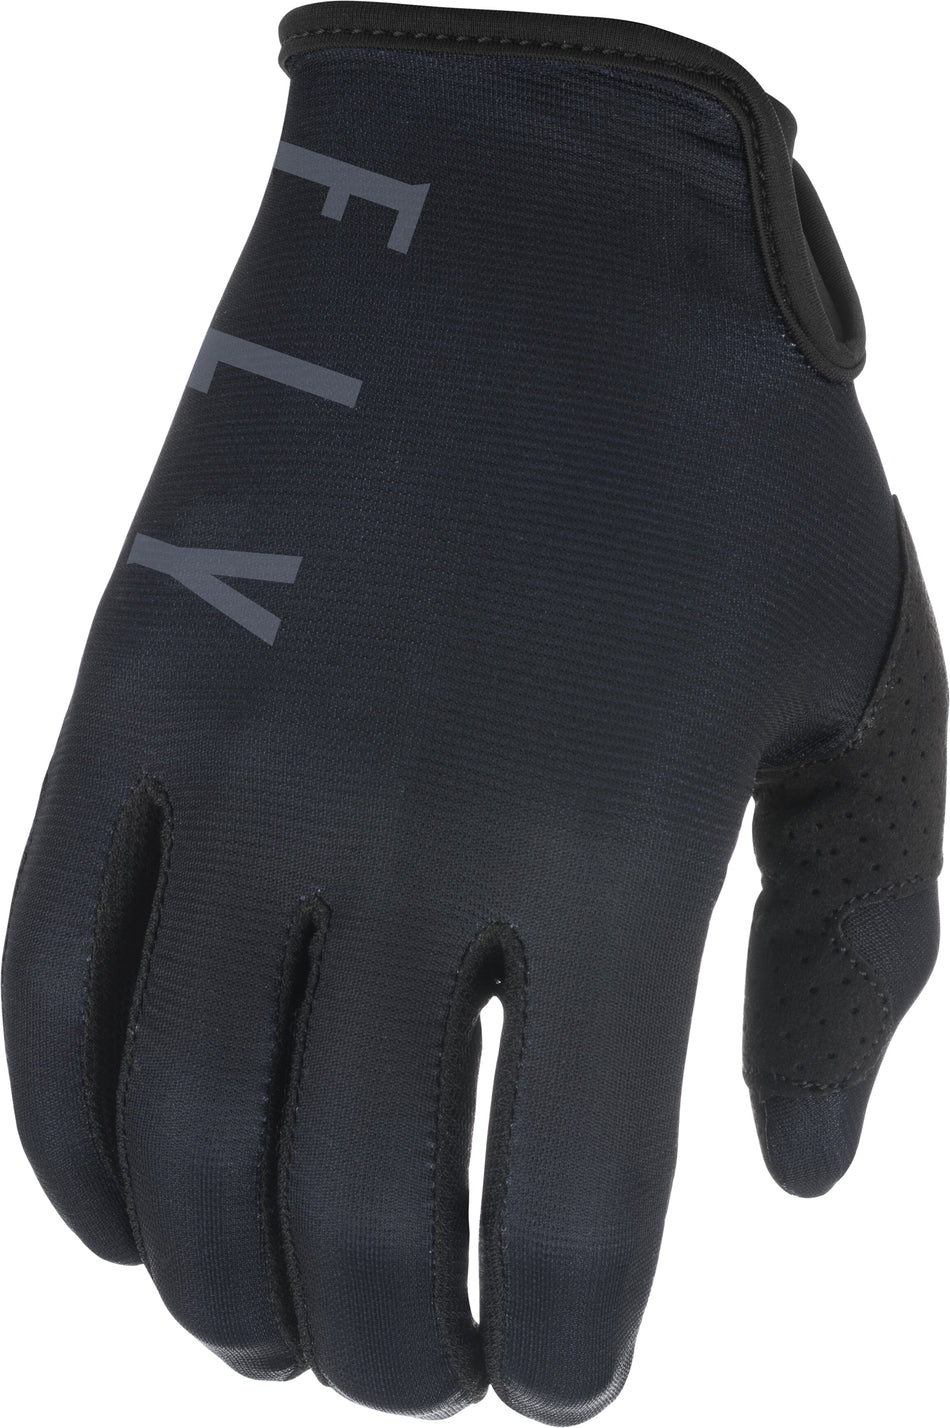 FLY RACING Lite Gloves Black/Grey Sz 13 374-71013